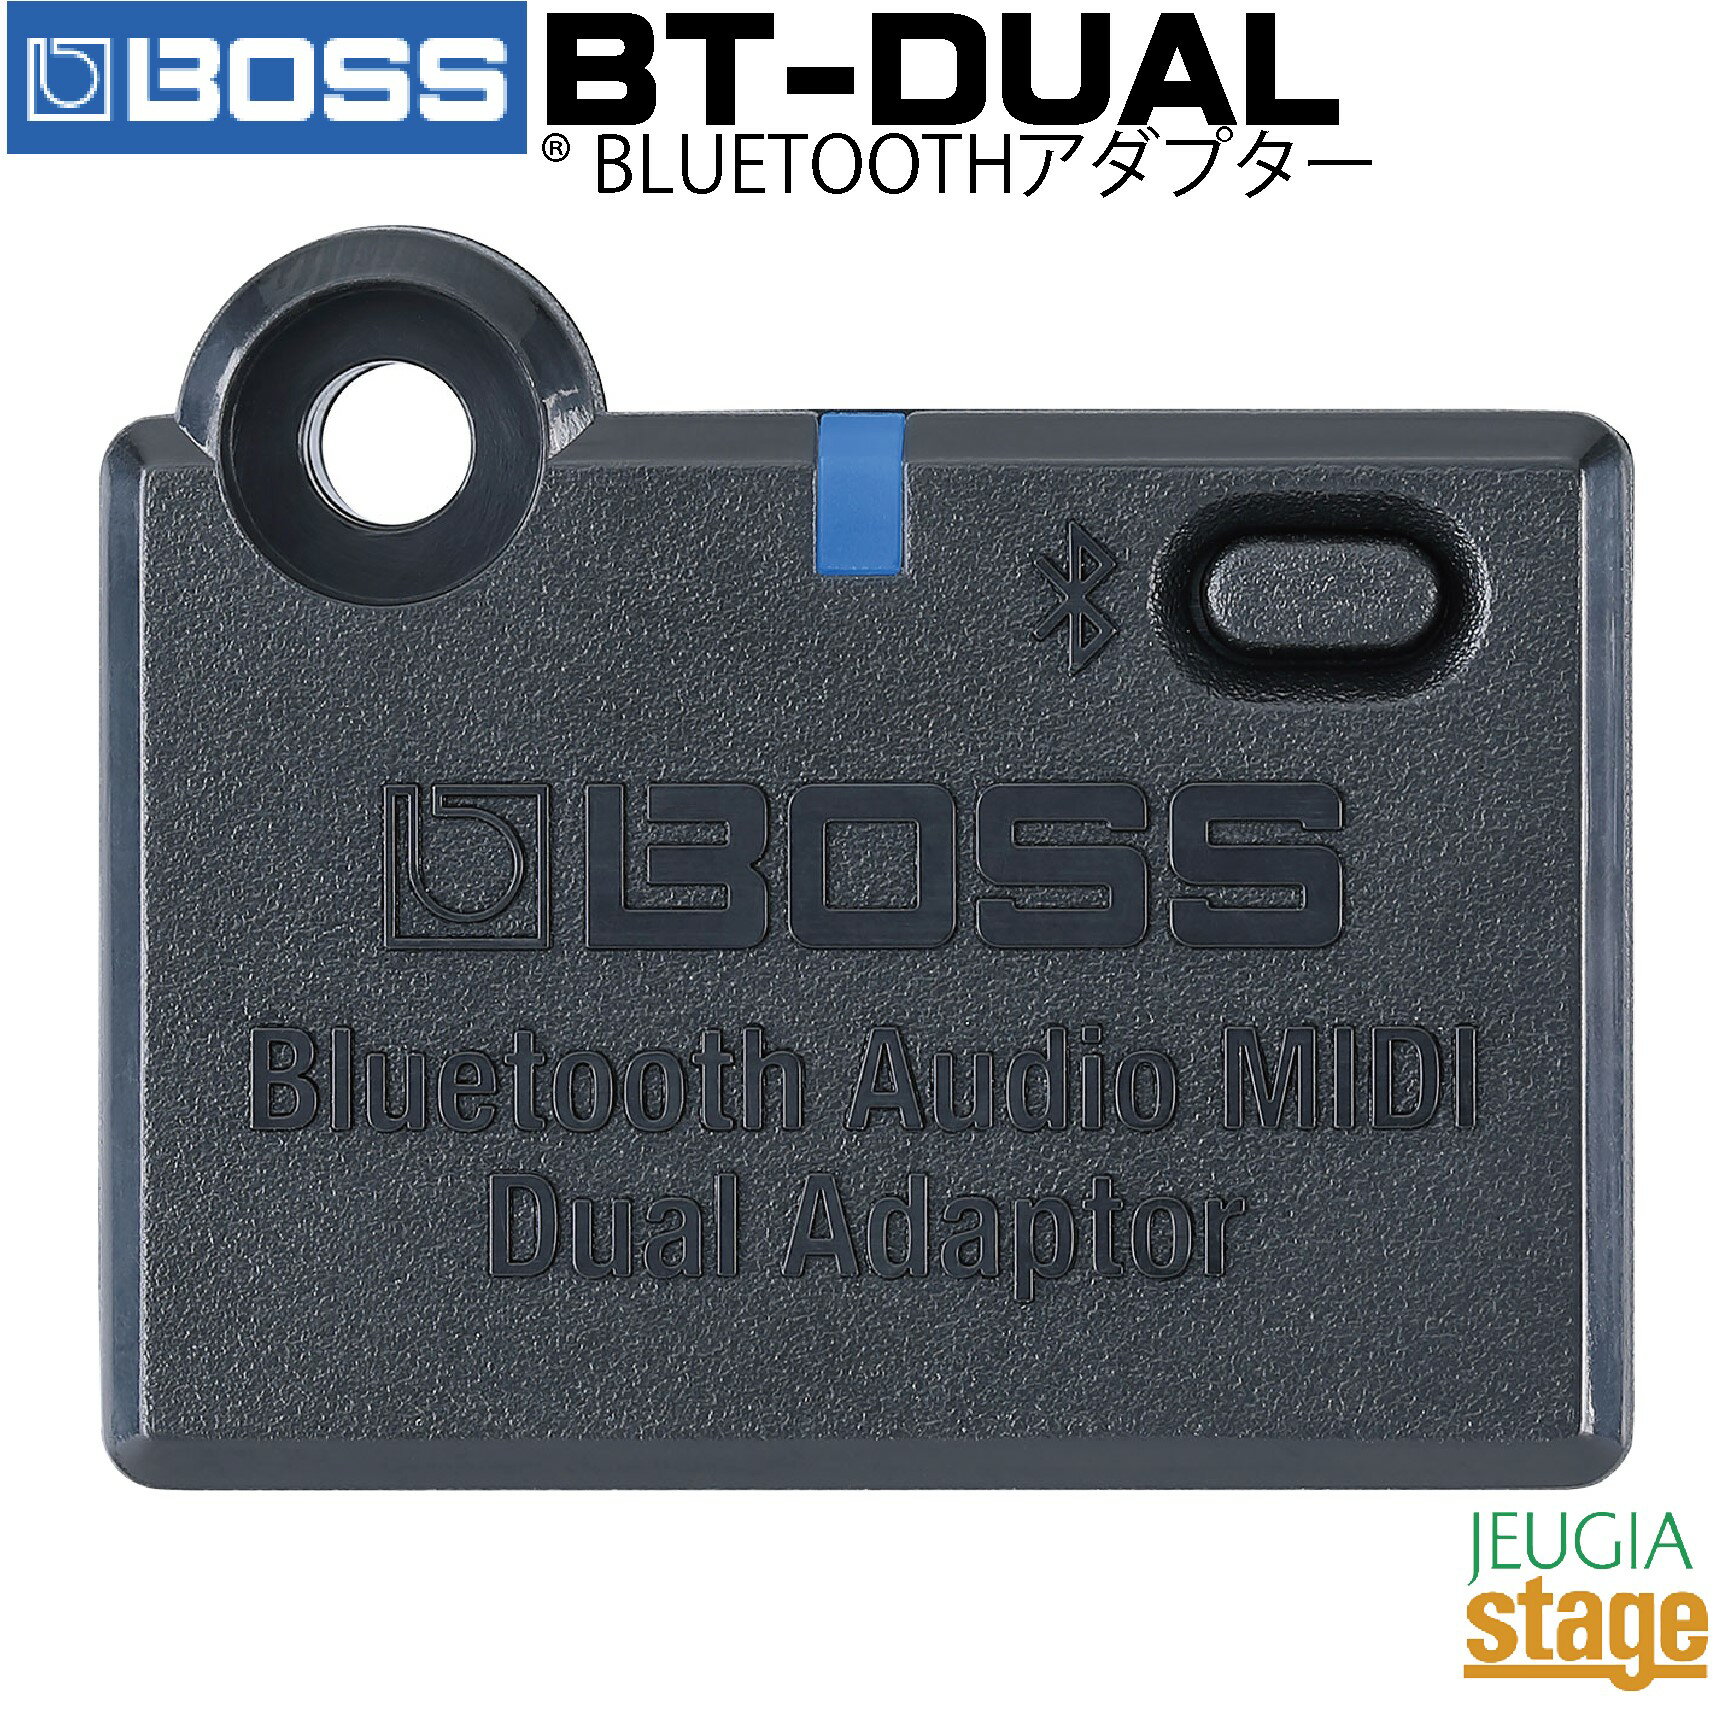 BOSS BT-DUAL Bluetooth® Audio MIDI Dual Adaptorボス ブルートゥース アダプター【Stage-Rakuten Guitar Accessory】for Roland エフェクター アンプ V-Drum音源 等